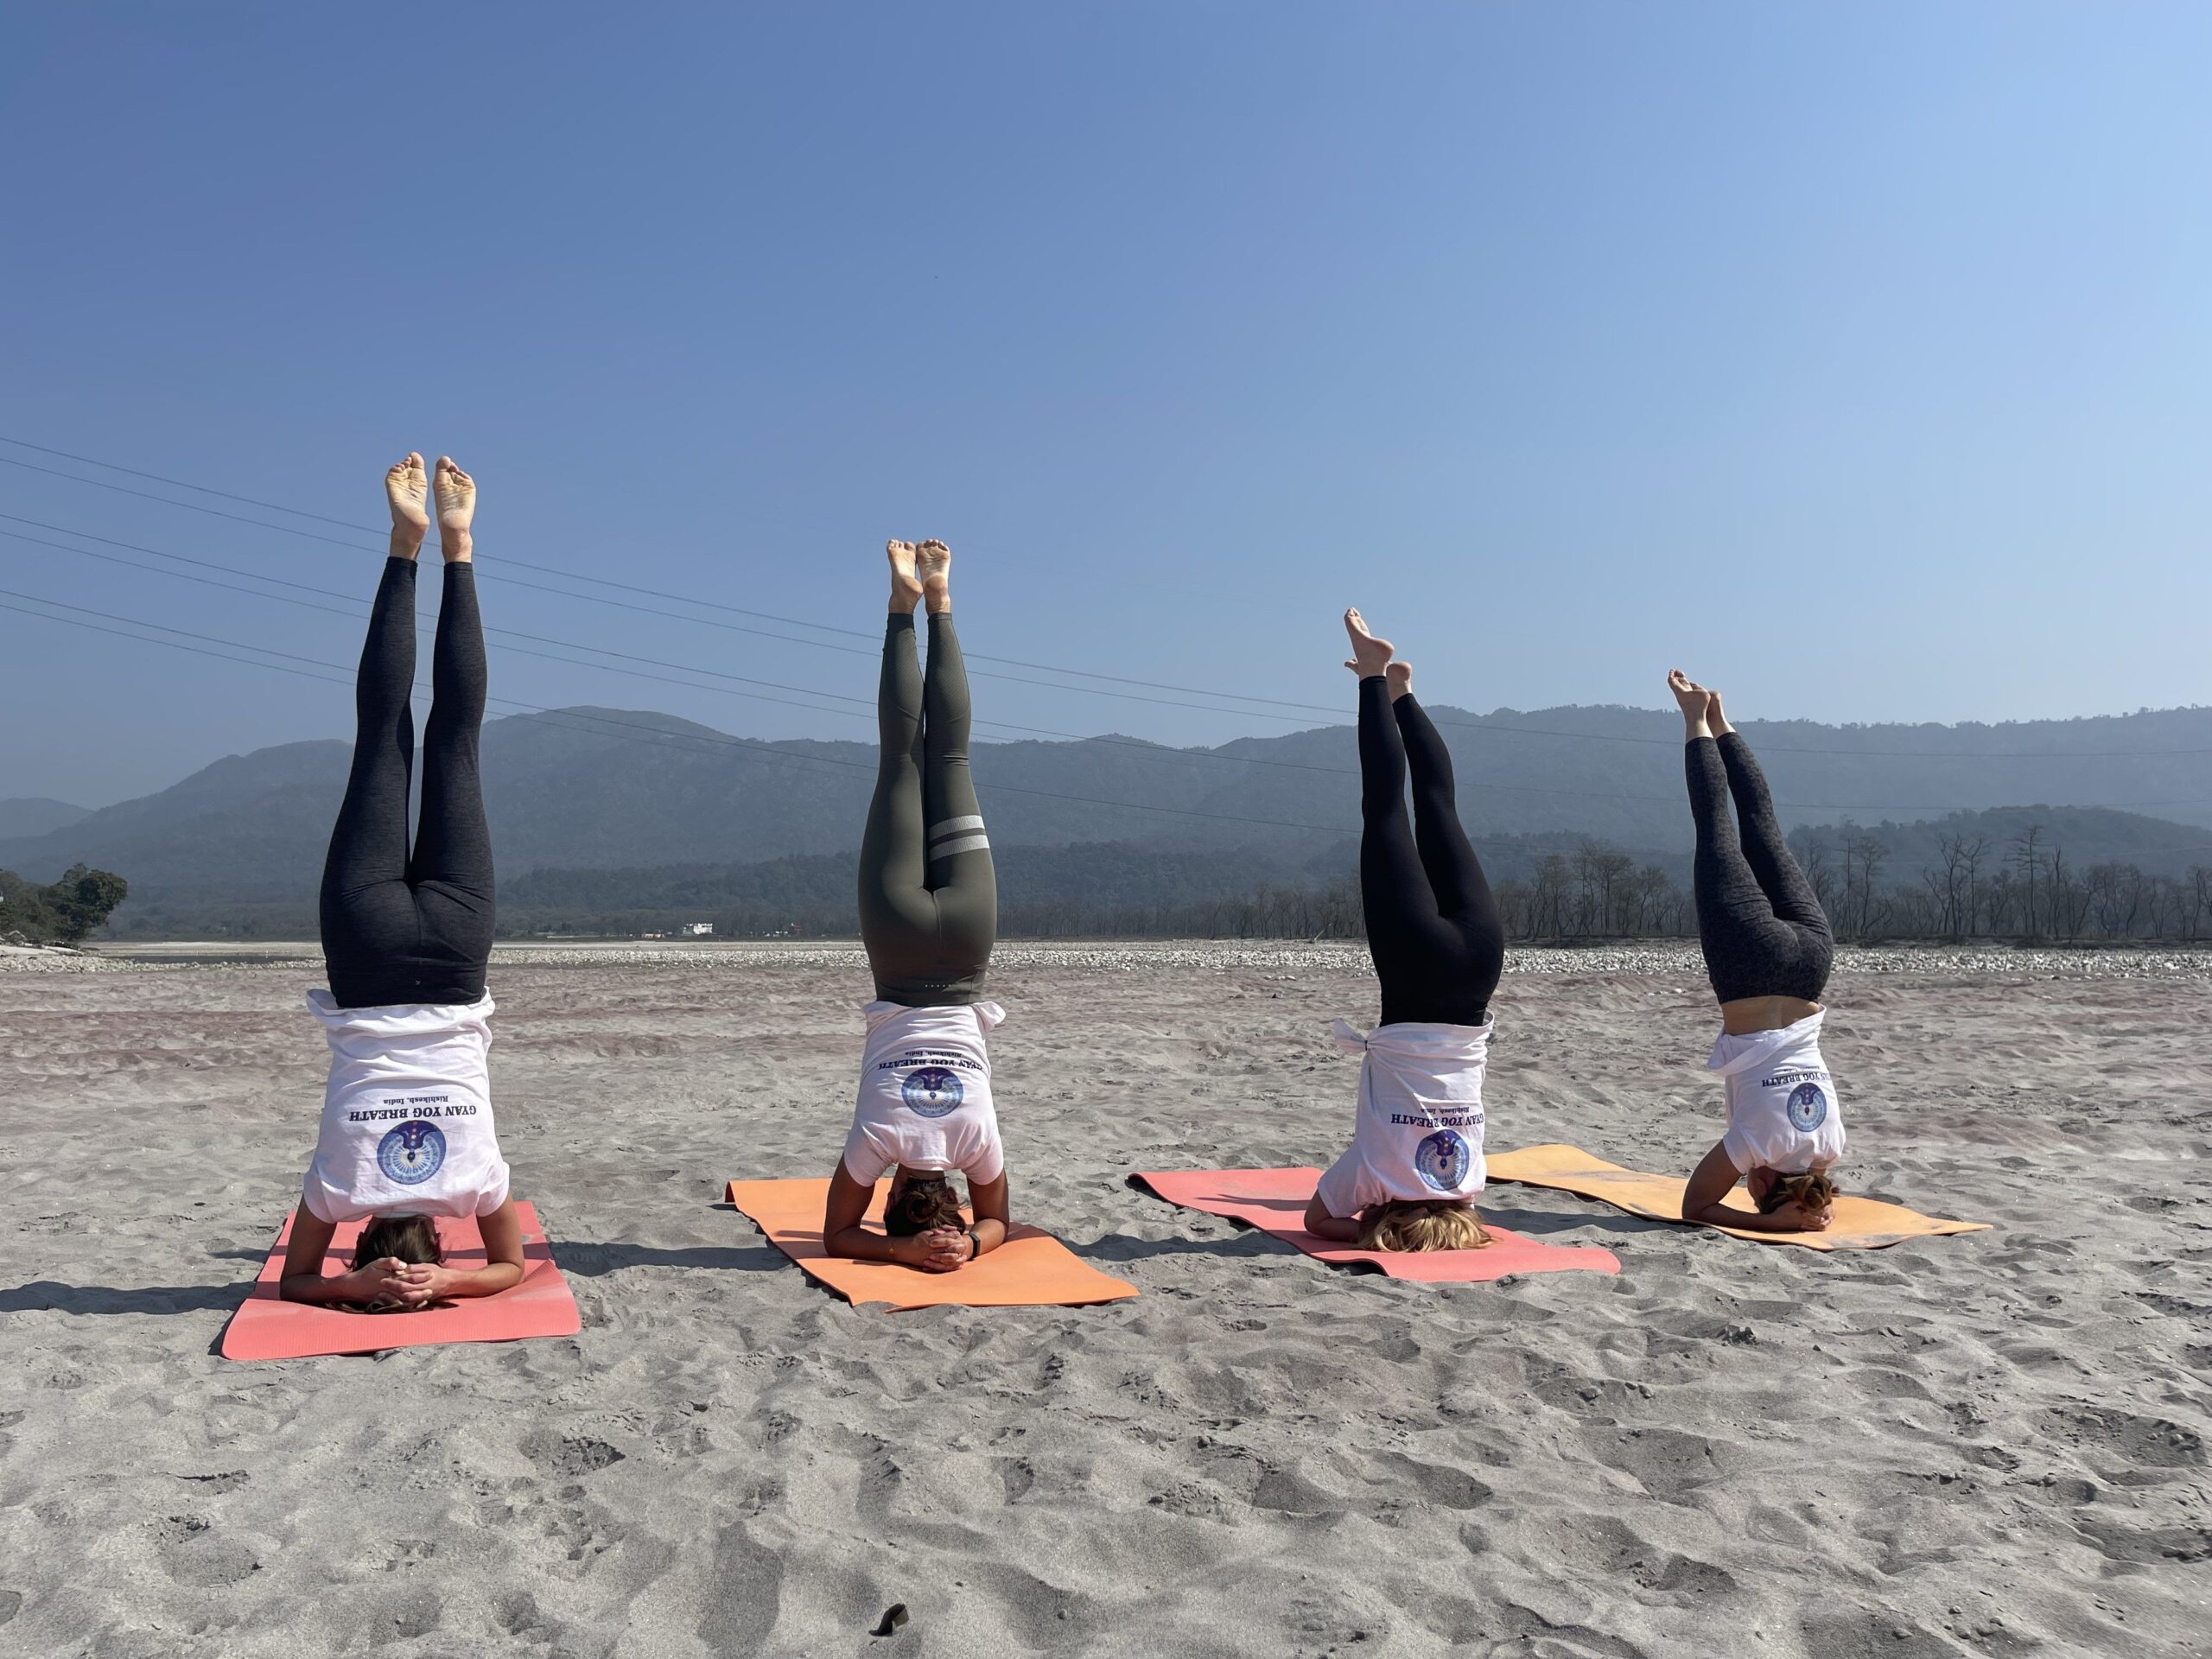 Students practising for 200 hour yoga teacher training in India